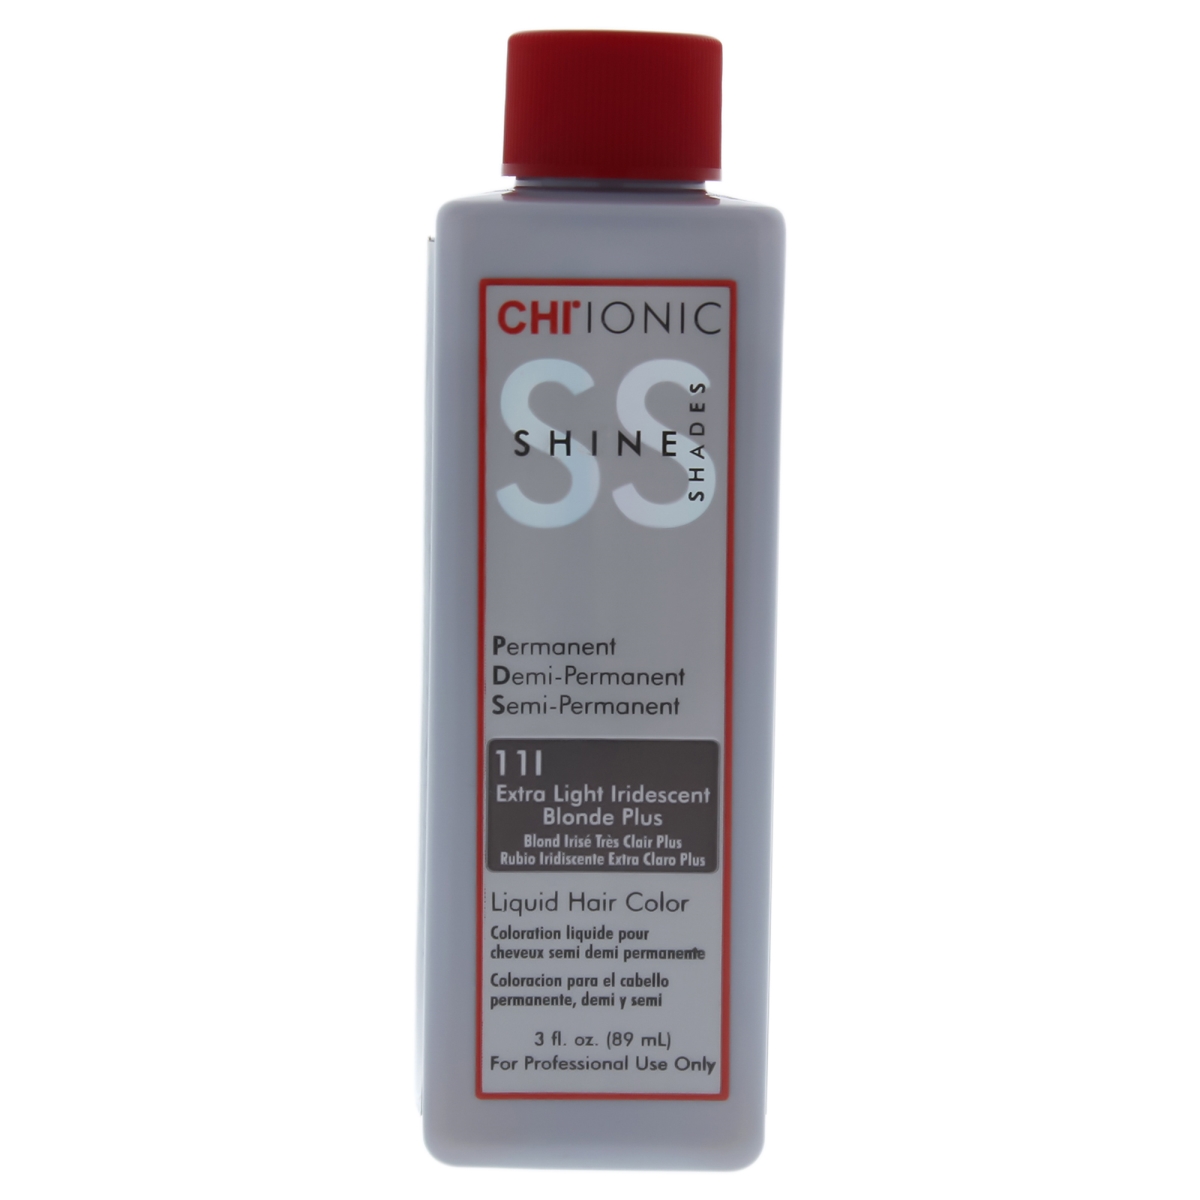 I0084002 Ionic Shine Shades Liquid Hair Color For Unisex - 11i Extra Light Iridescent Blonde Plus - 3 Oz